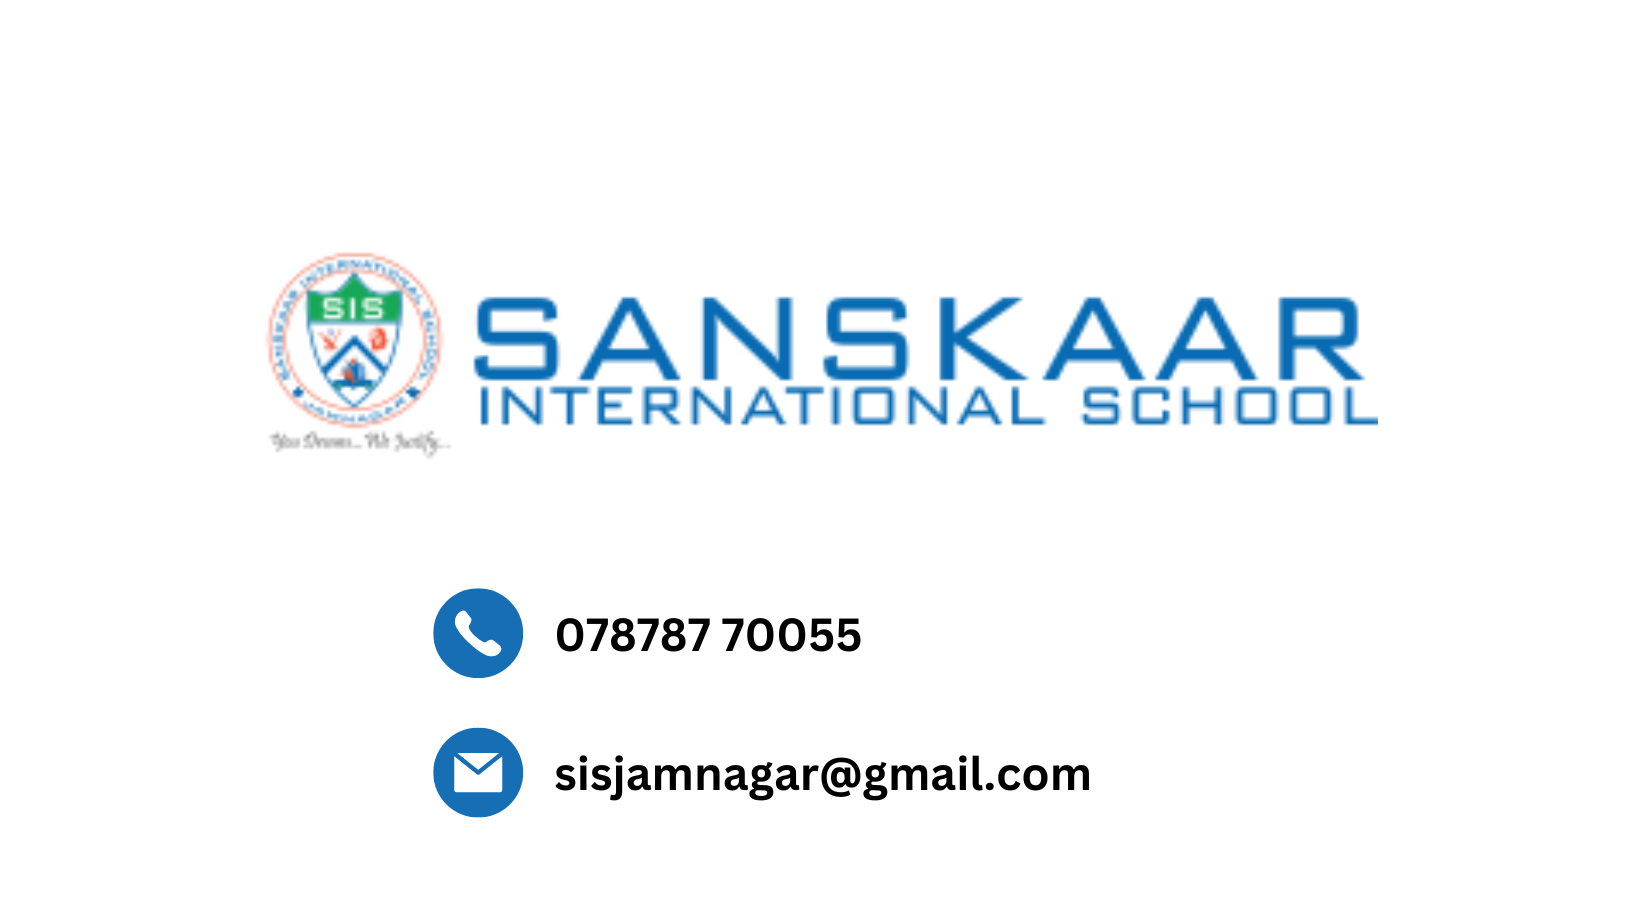 Sanskaar international school